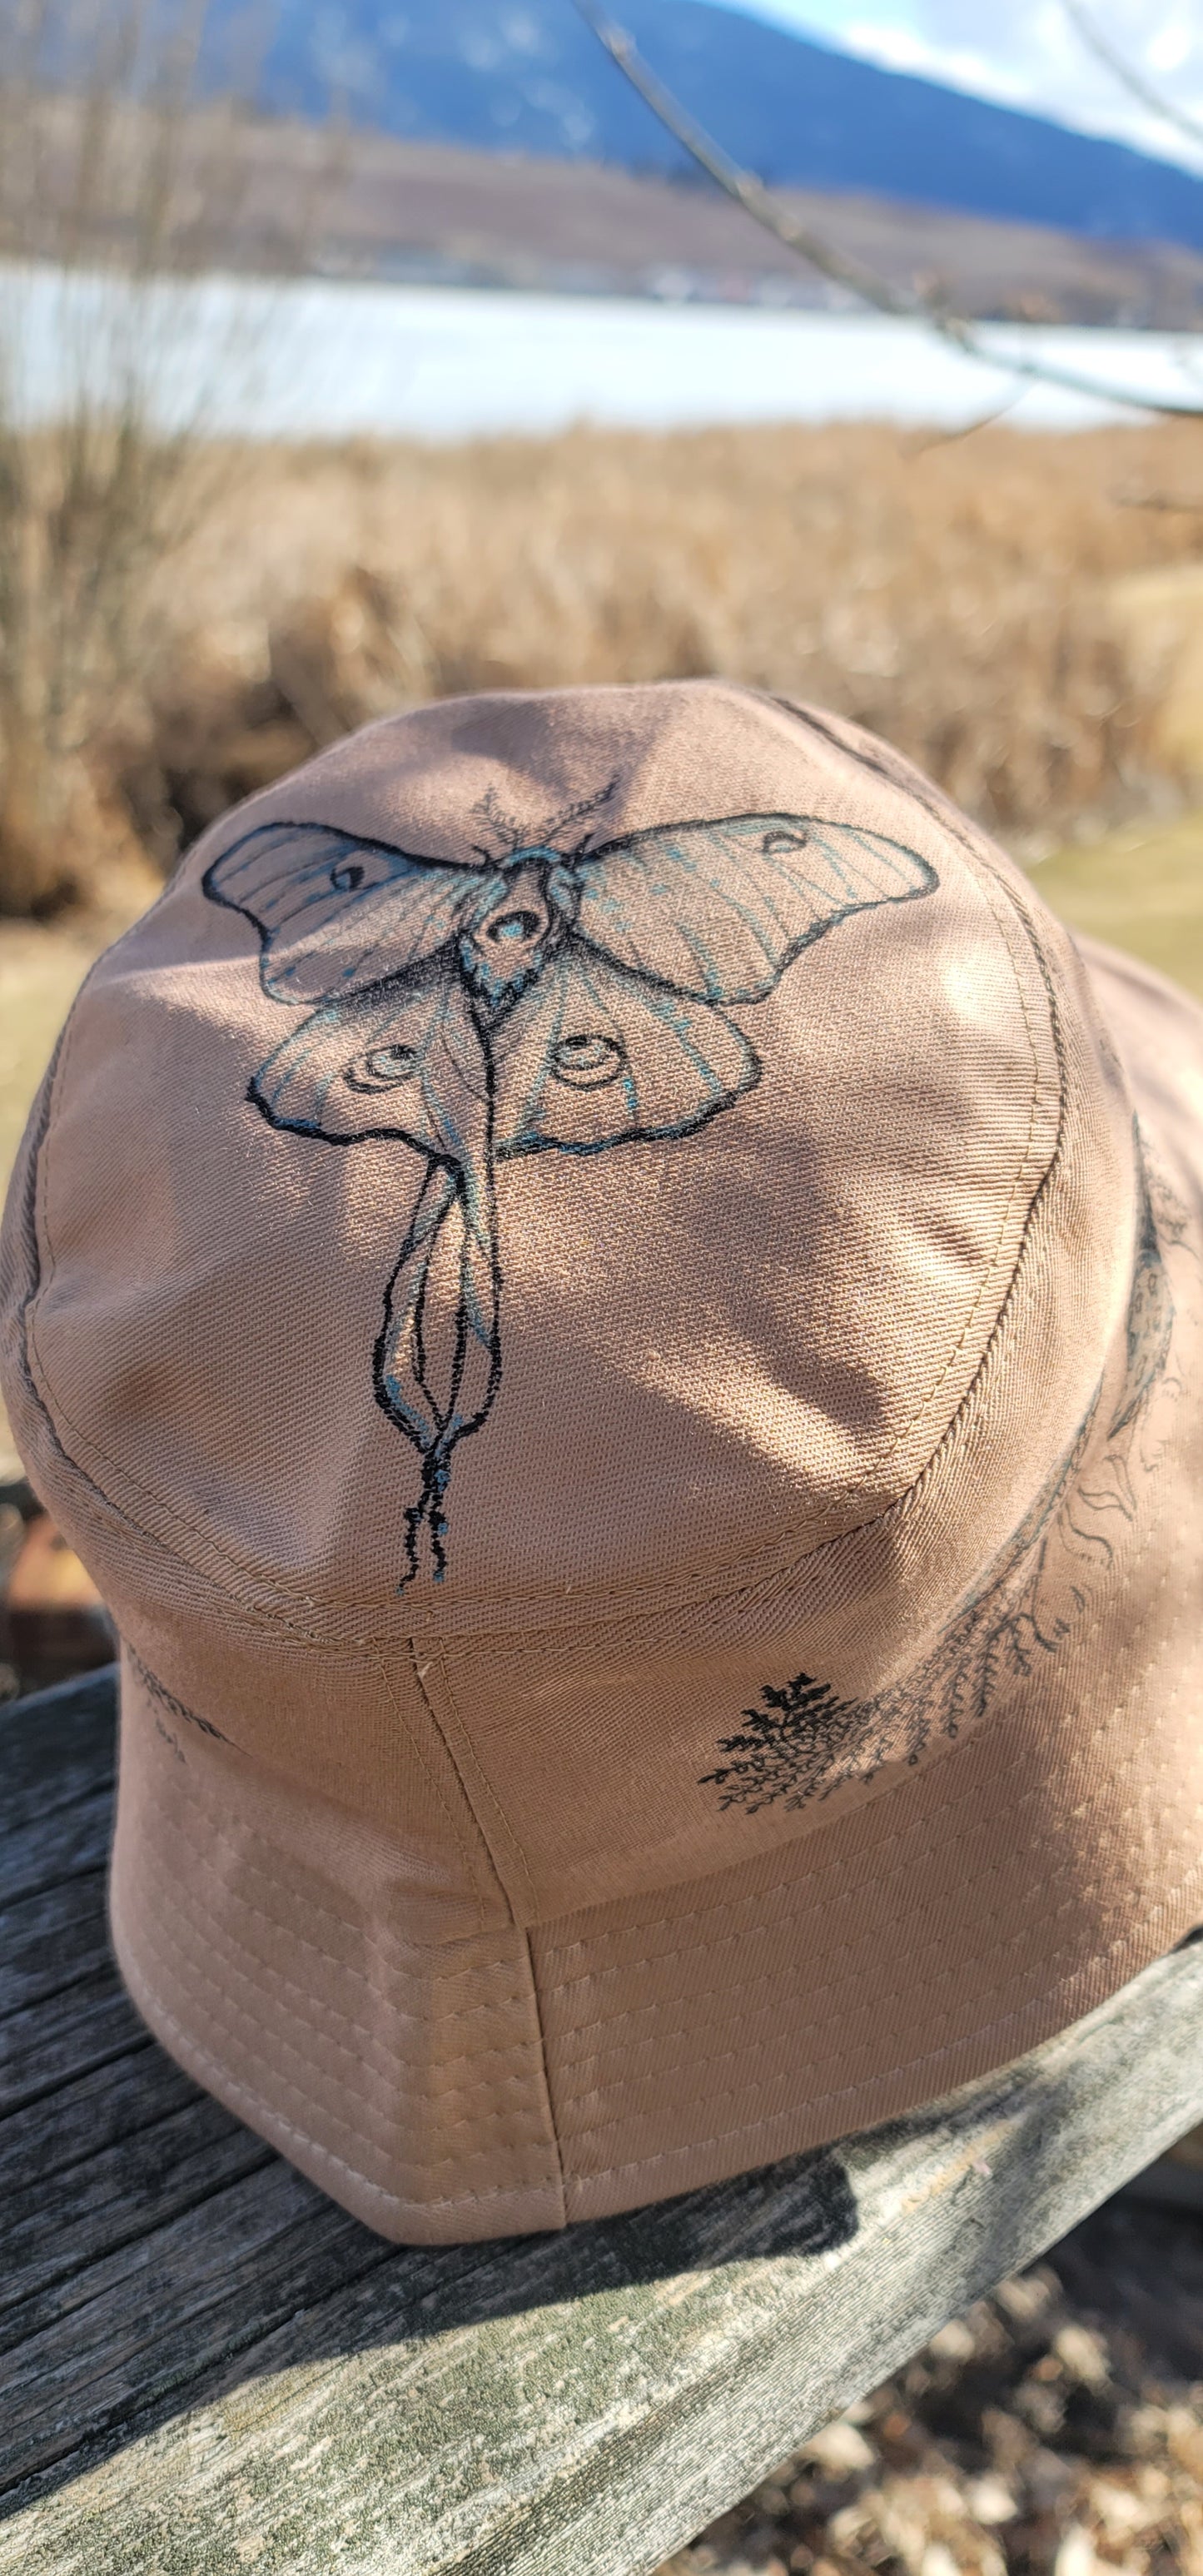 Luna Moth Bucket Hat